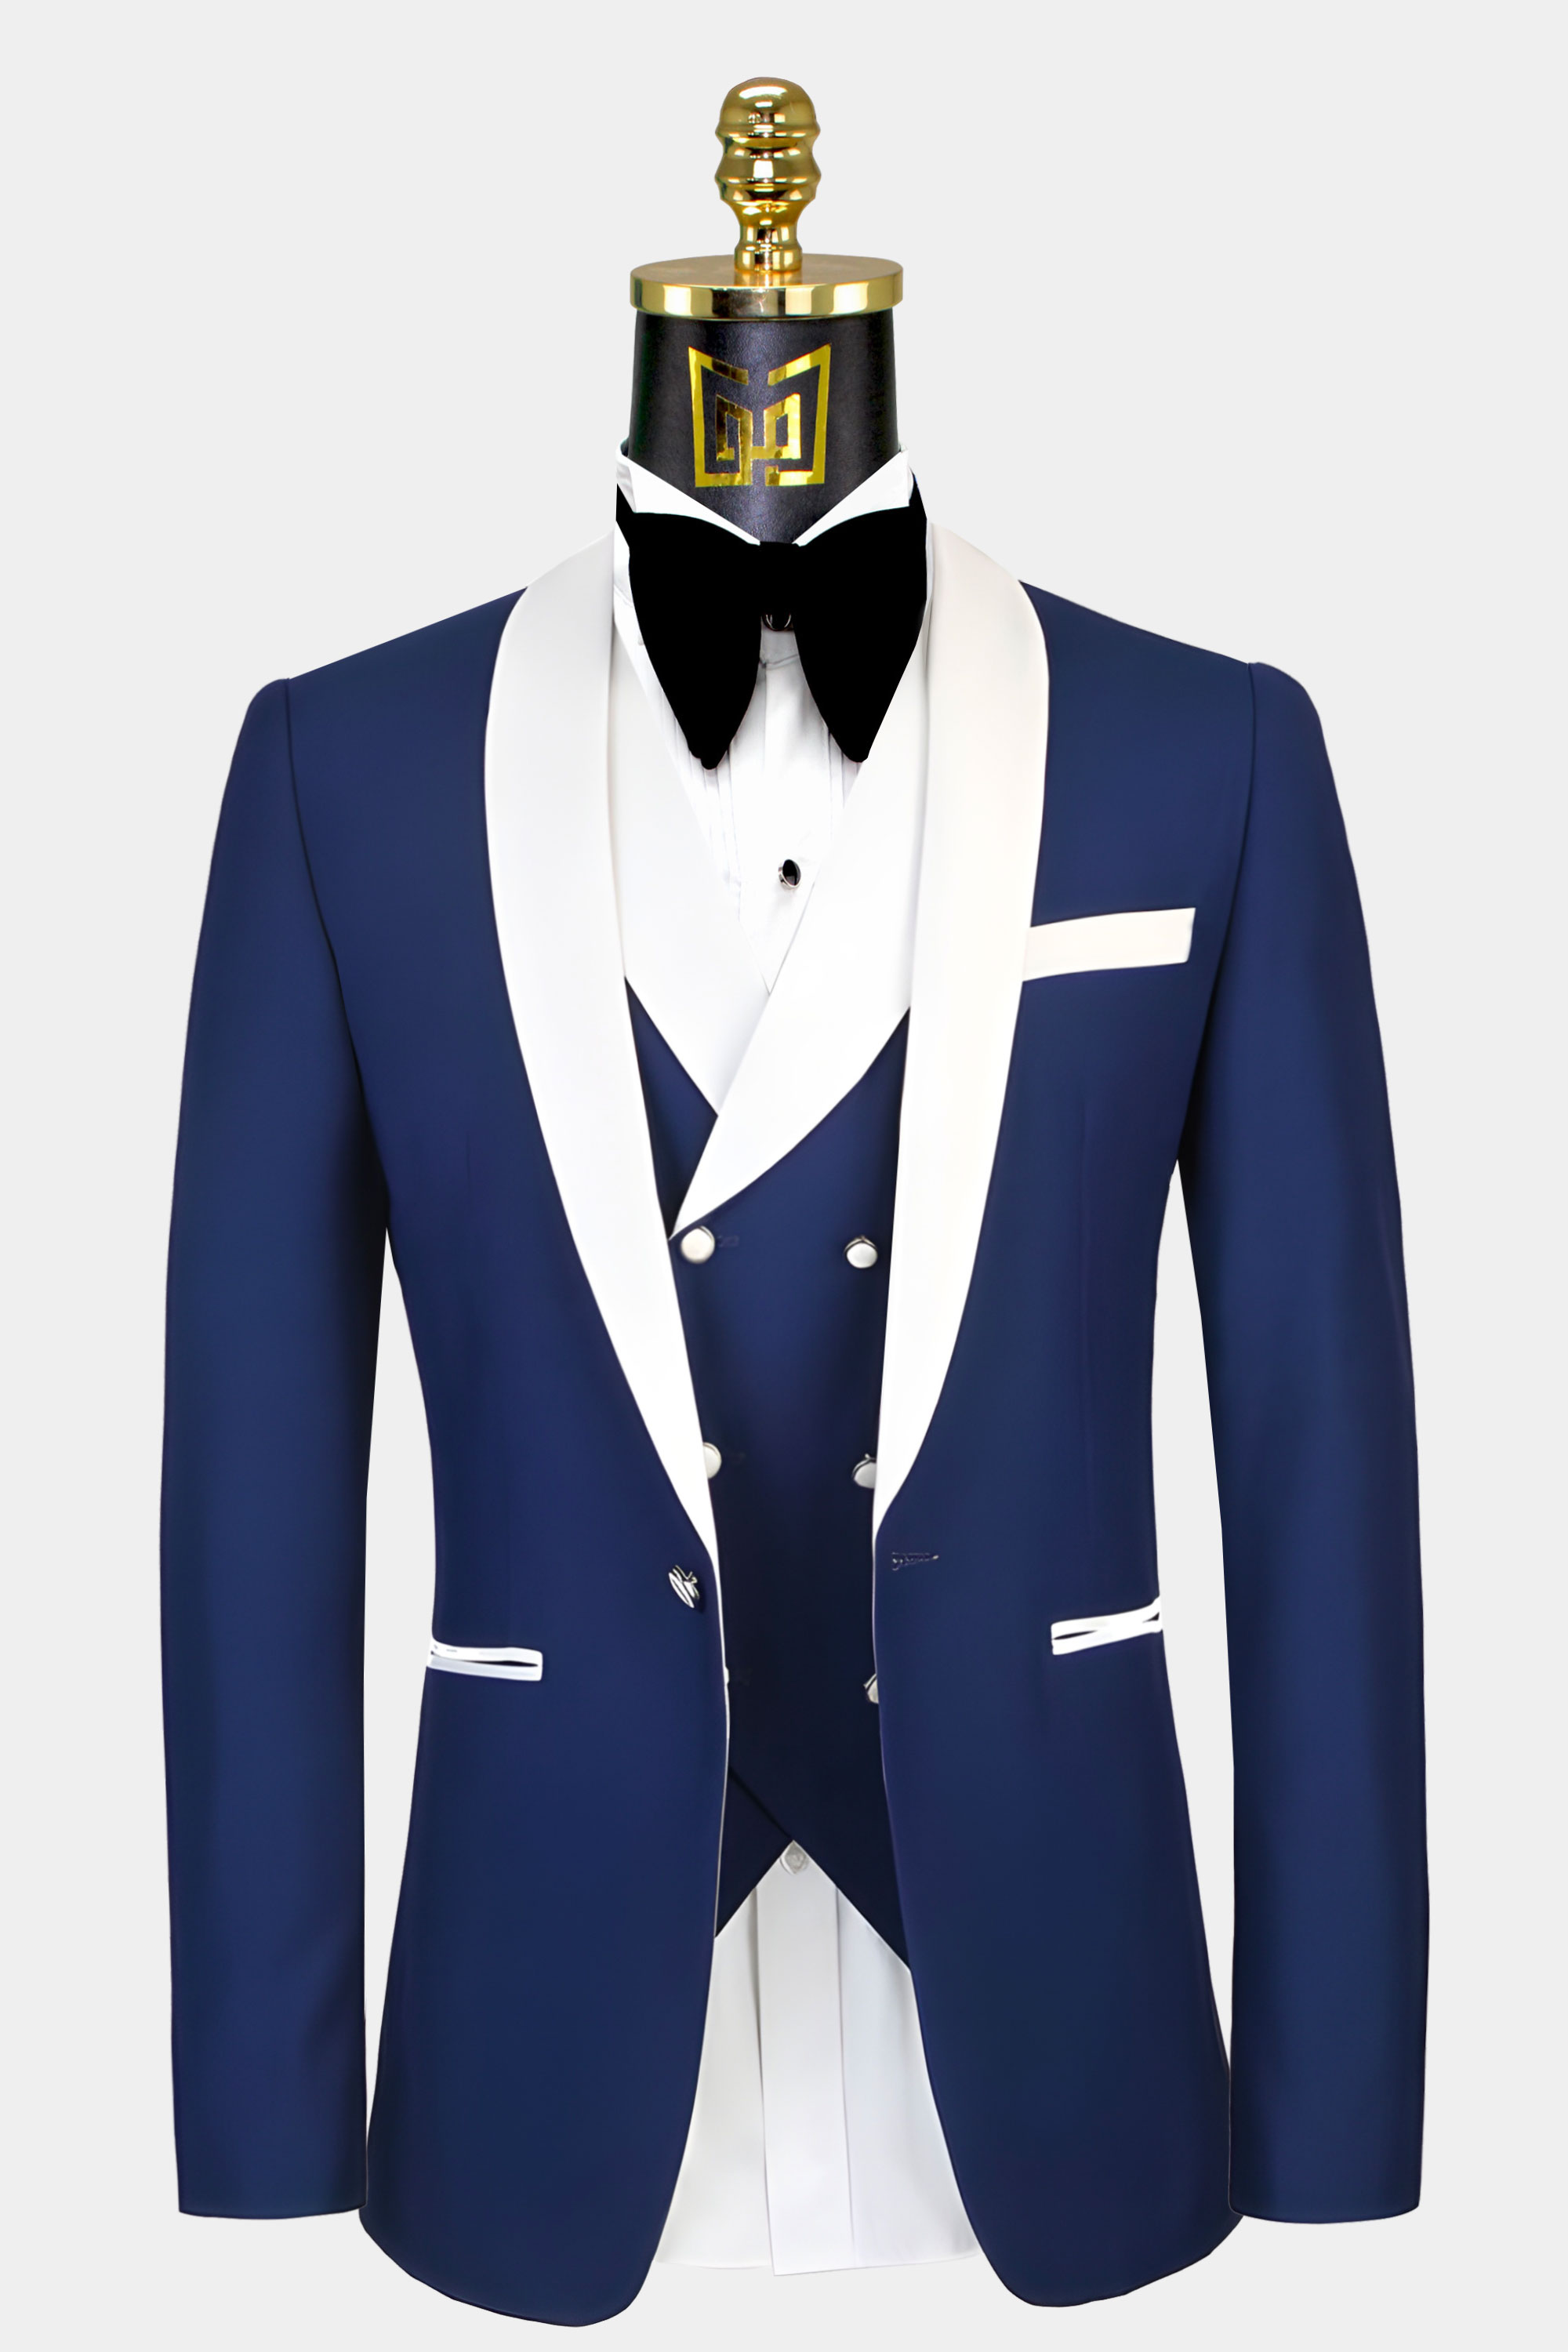 Navy-Blue-and-White-Tuxedo-Jacket-from-Gentlemansguru.com